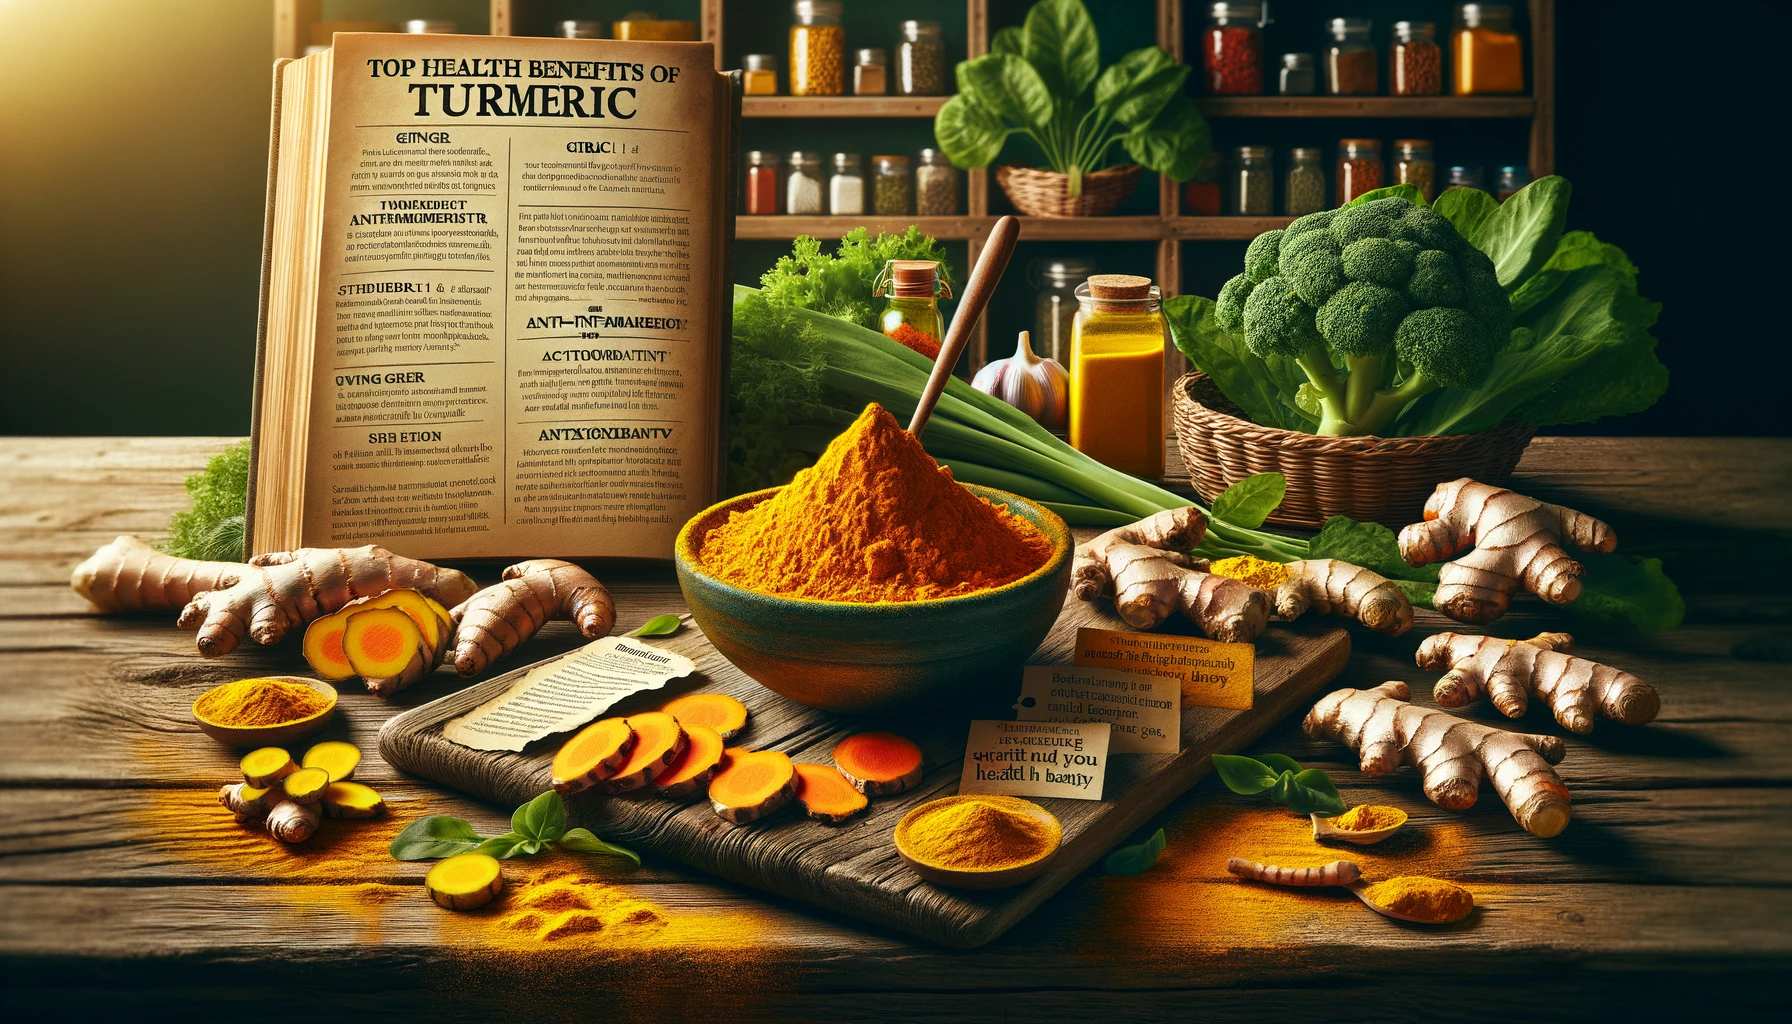 Top Health Benefits of Turmeric